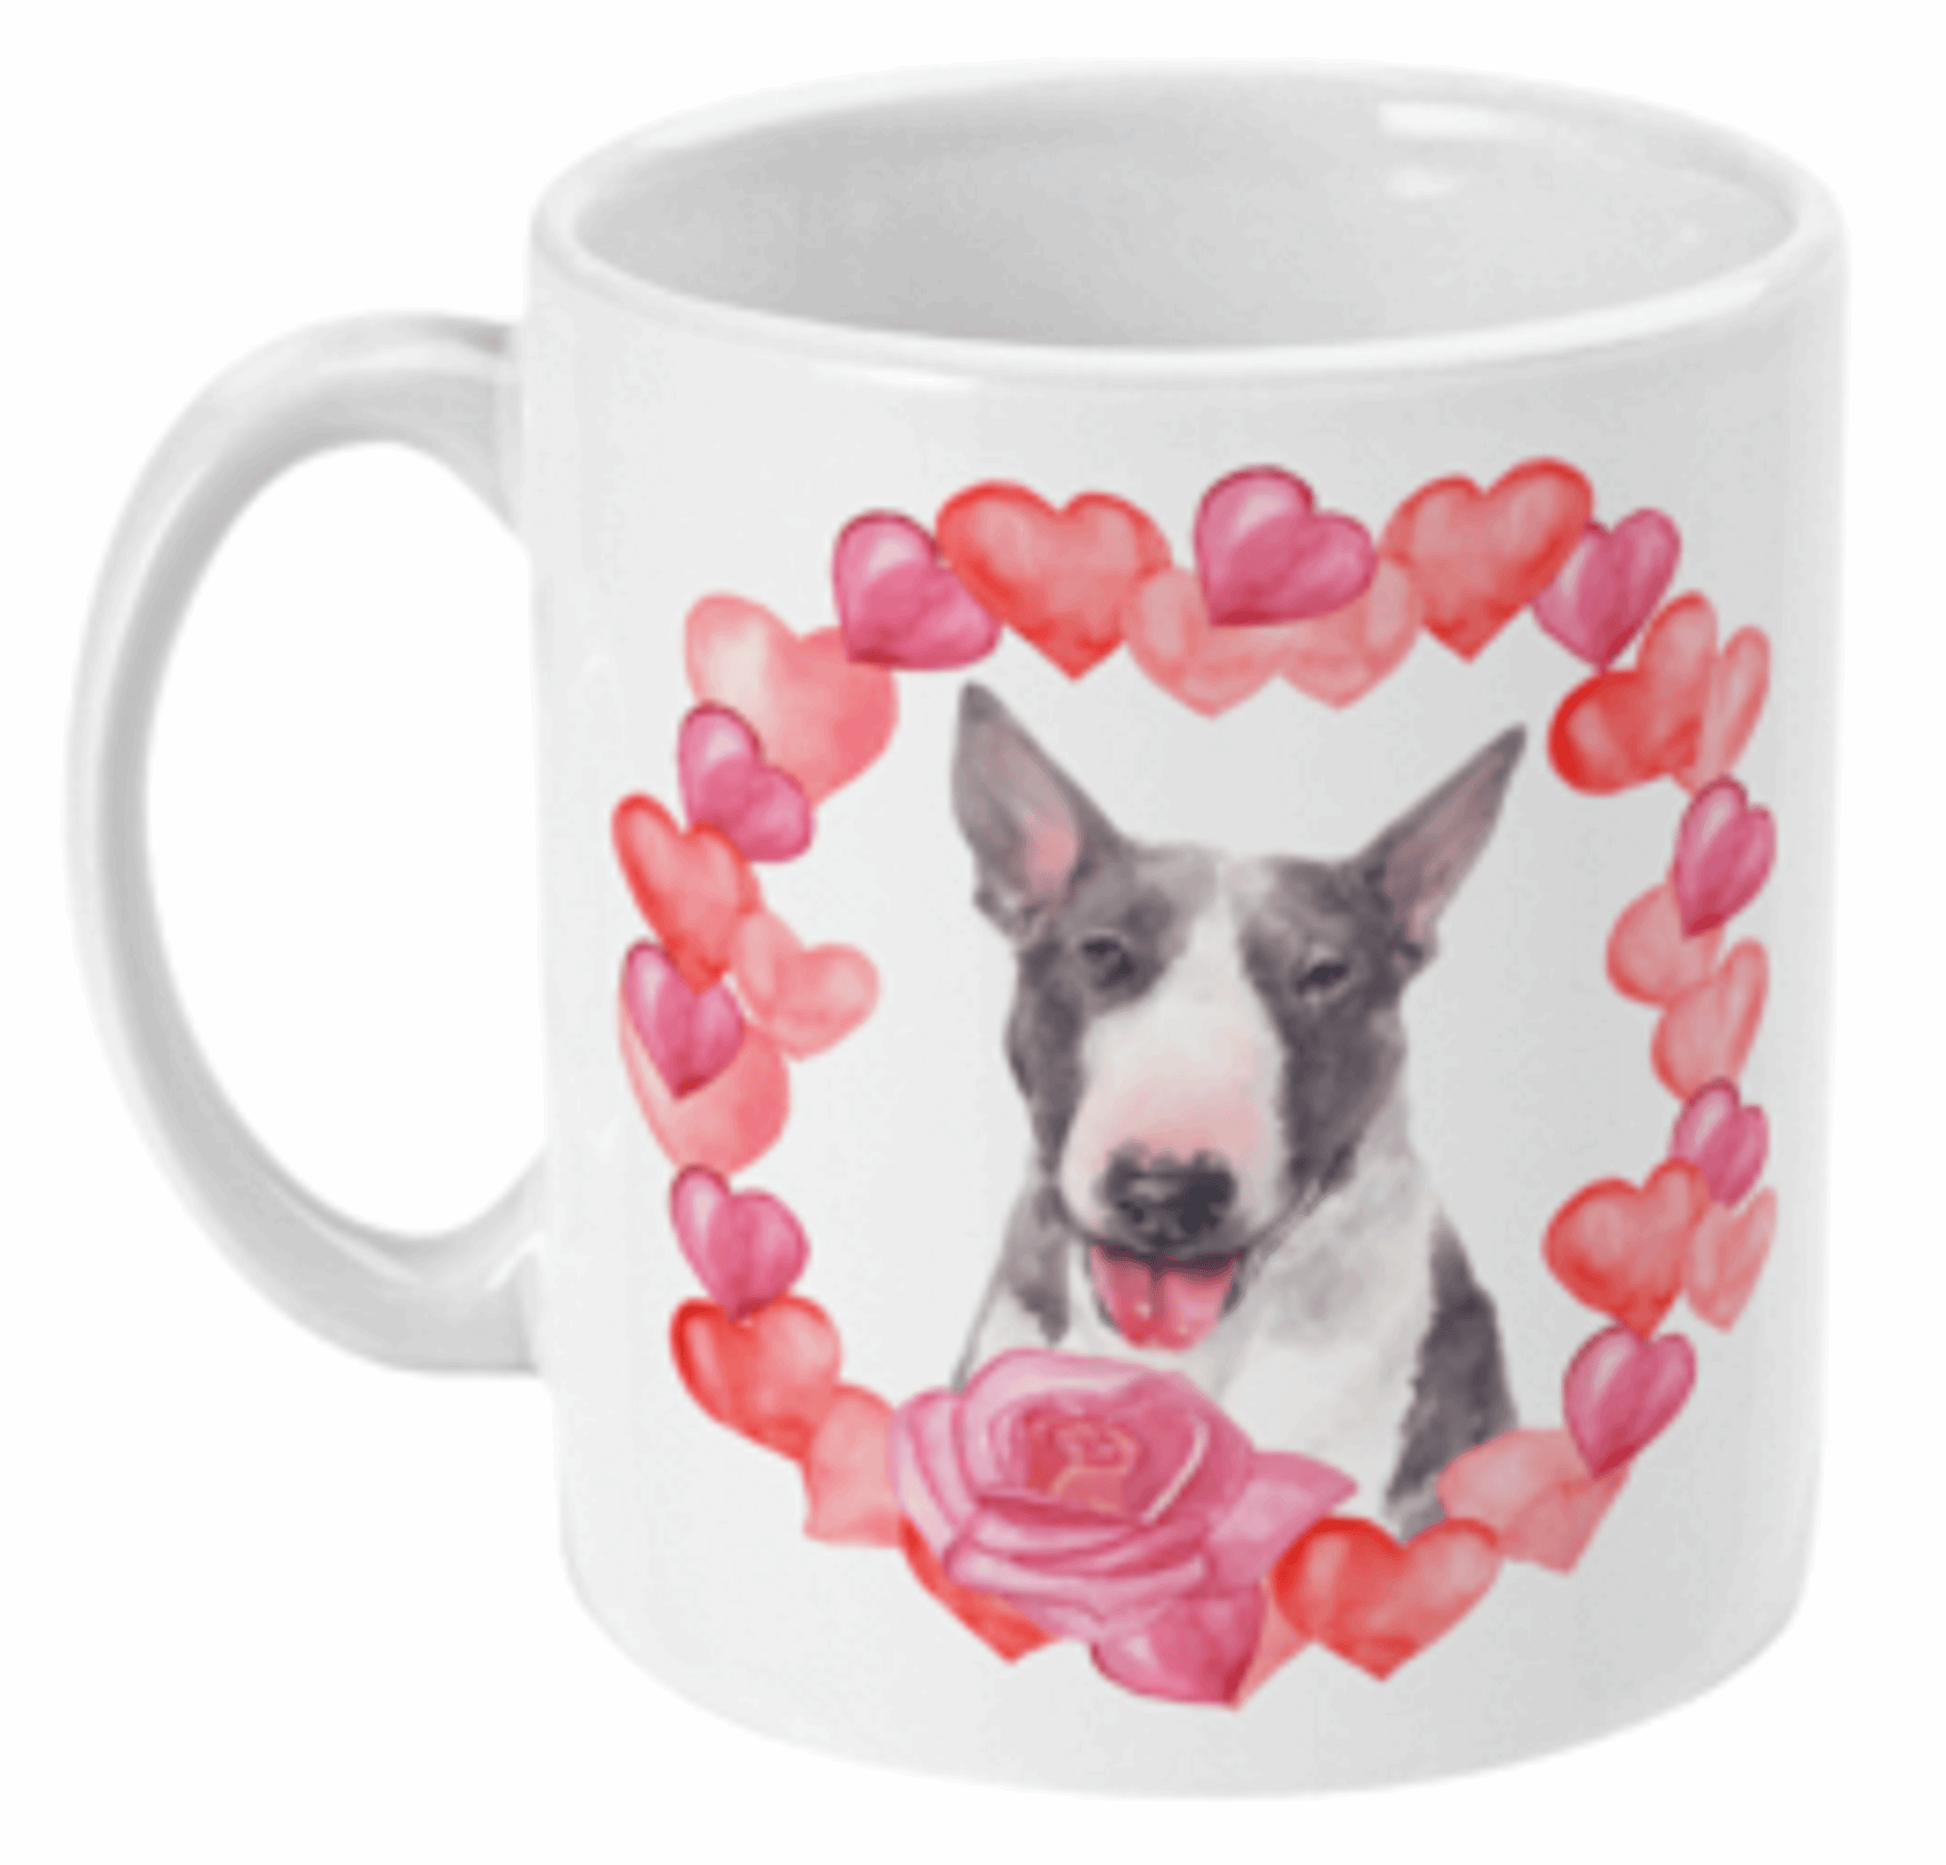  English Bull Terrier in Heart Wreath Mug by Free Spirit Accessories sold by Free Spirit Accessories